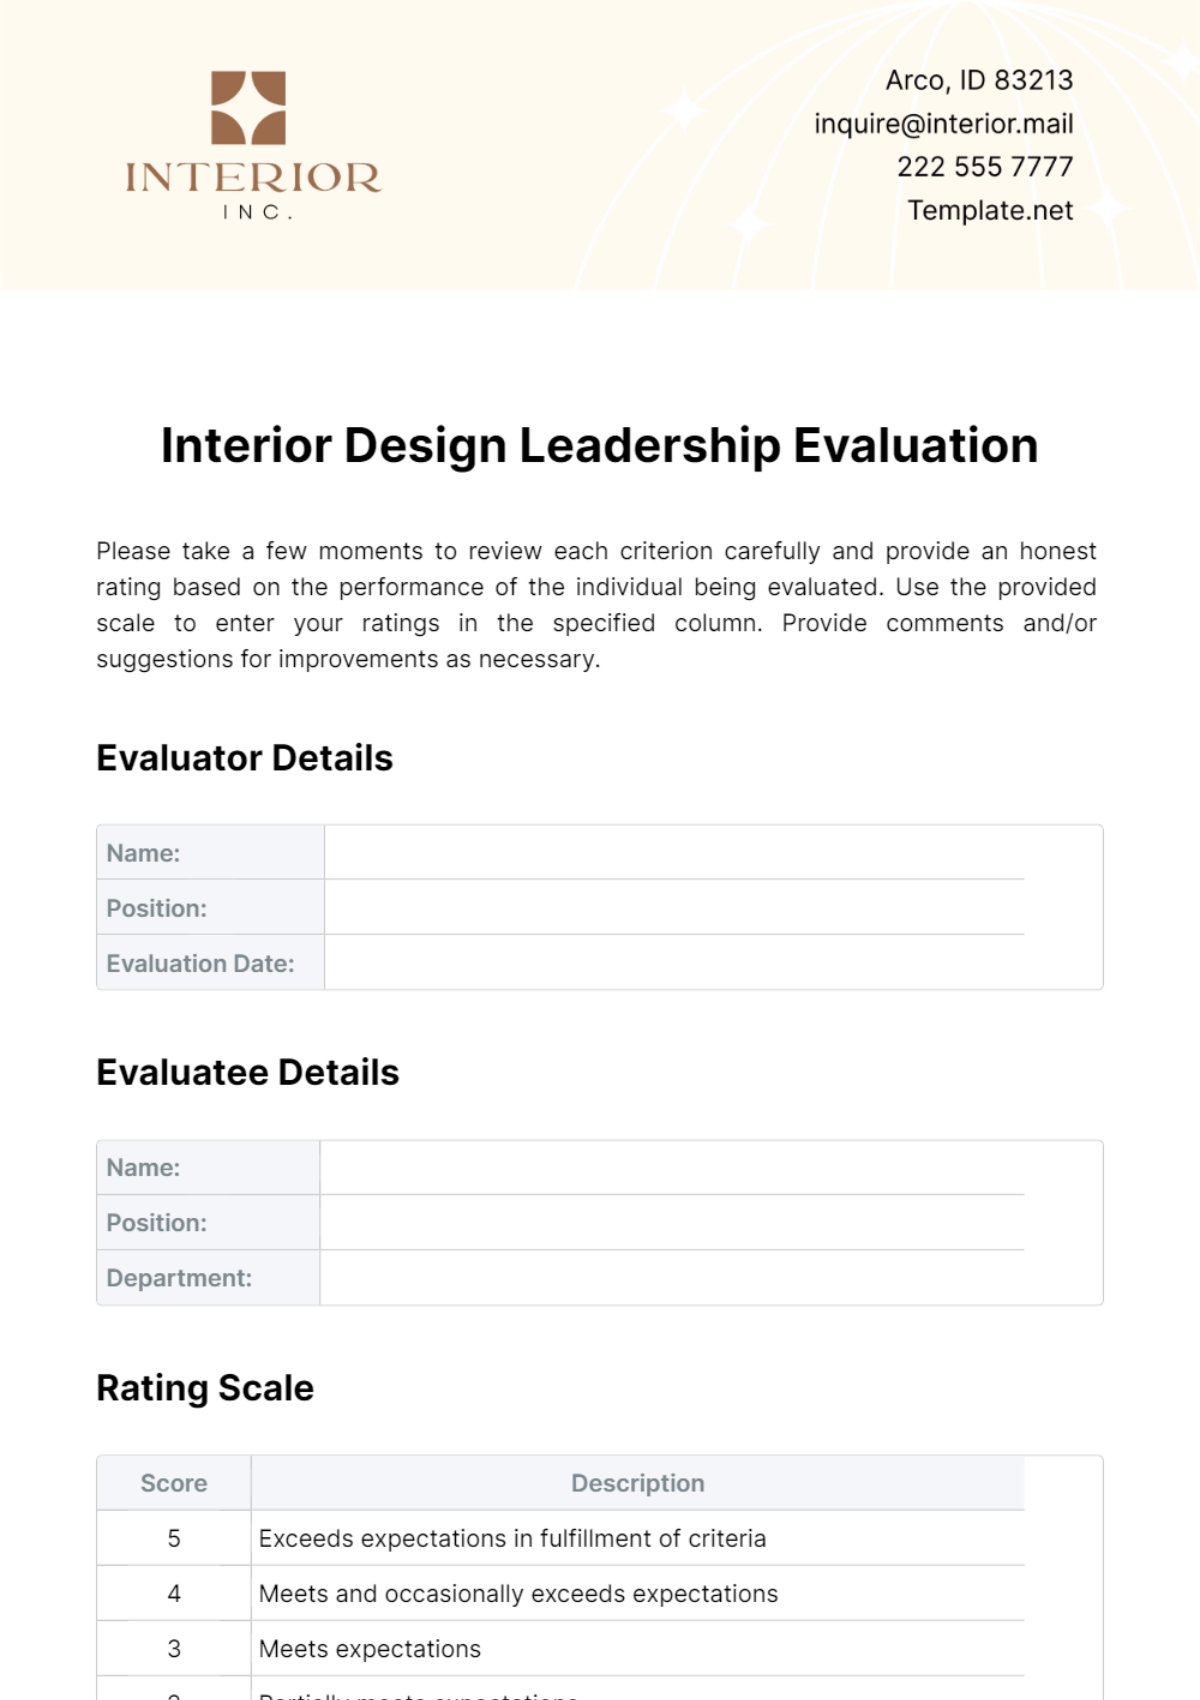 Interior Design Leadership Evaluation Template